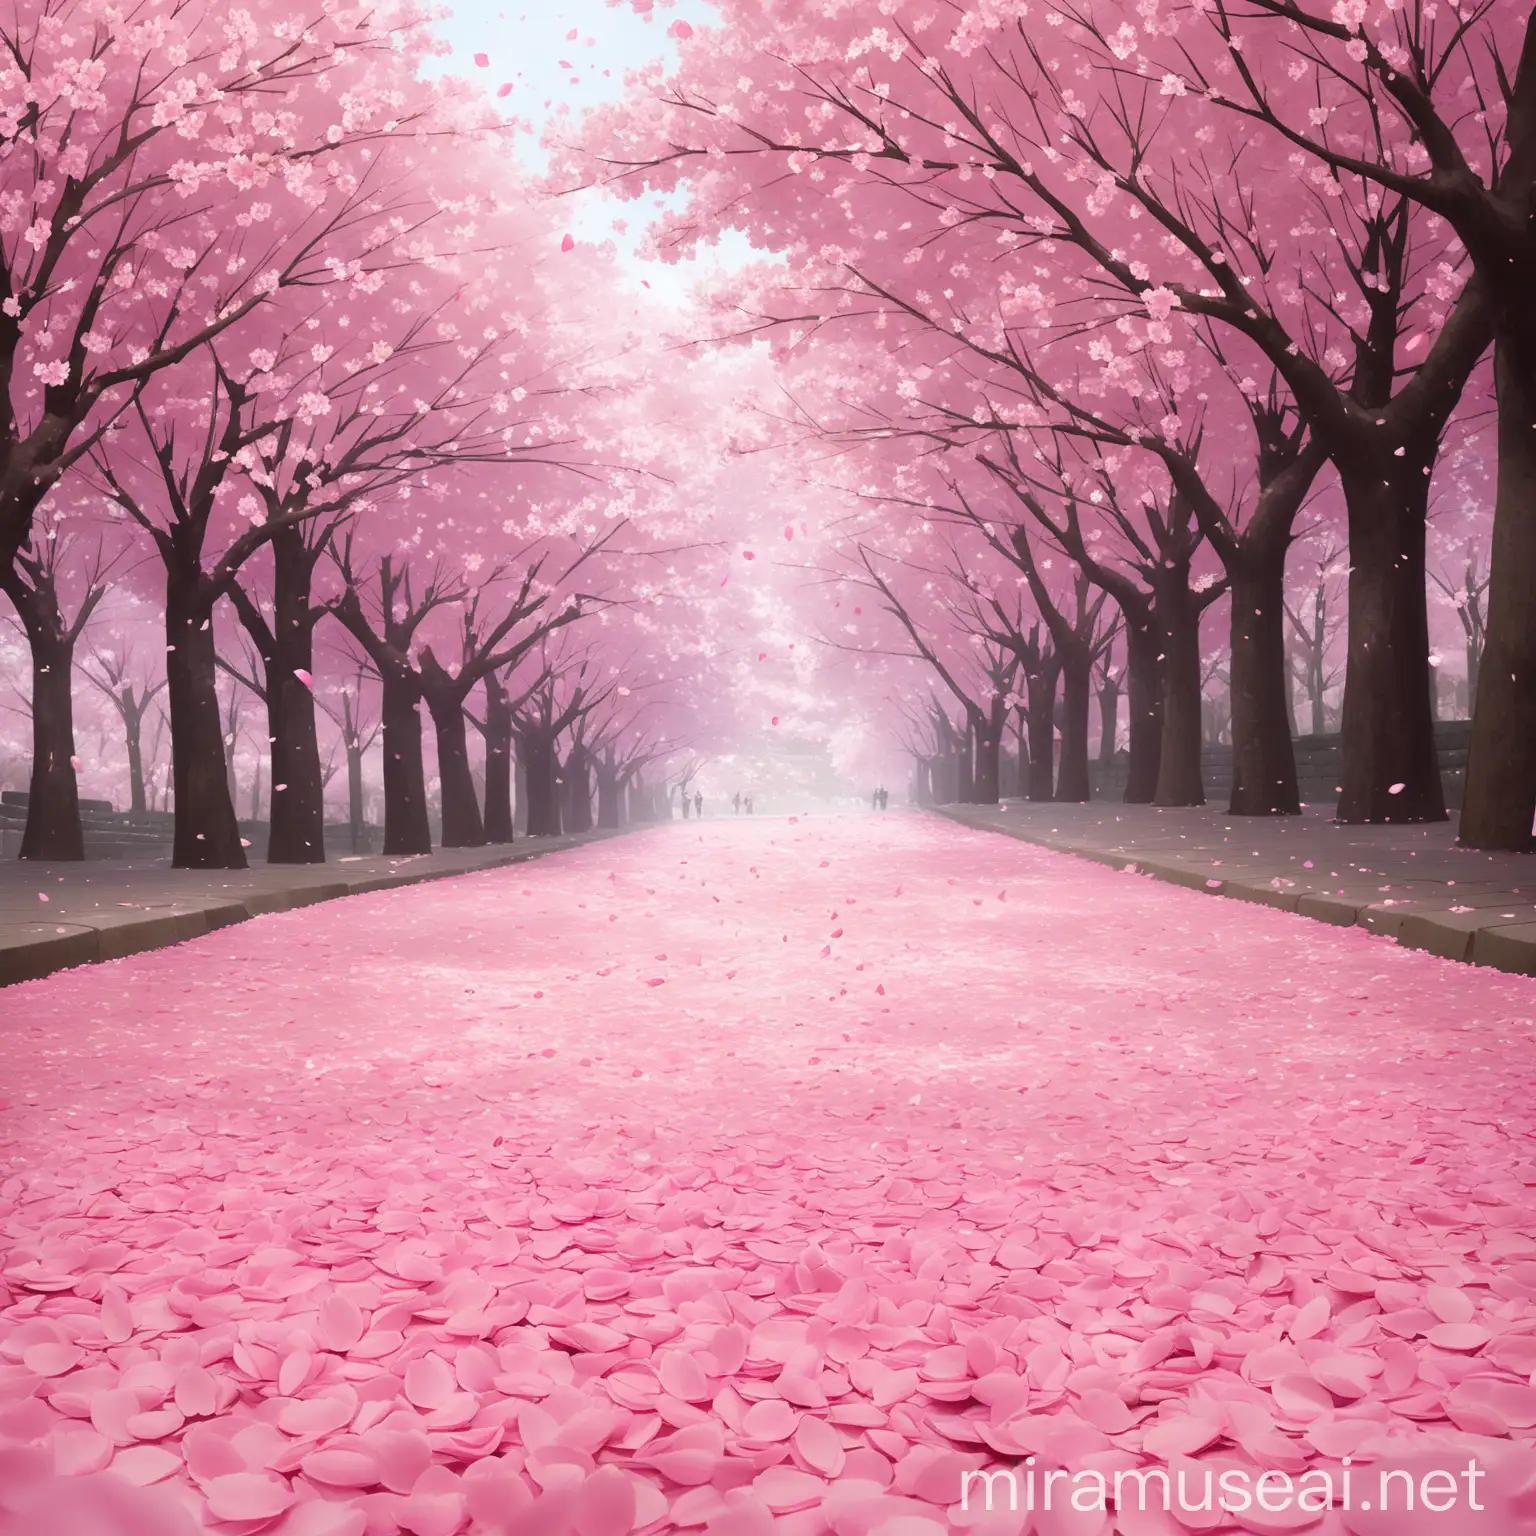 A sakura with pink petals on the ground and pink petals falling...beautiful